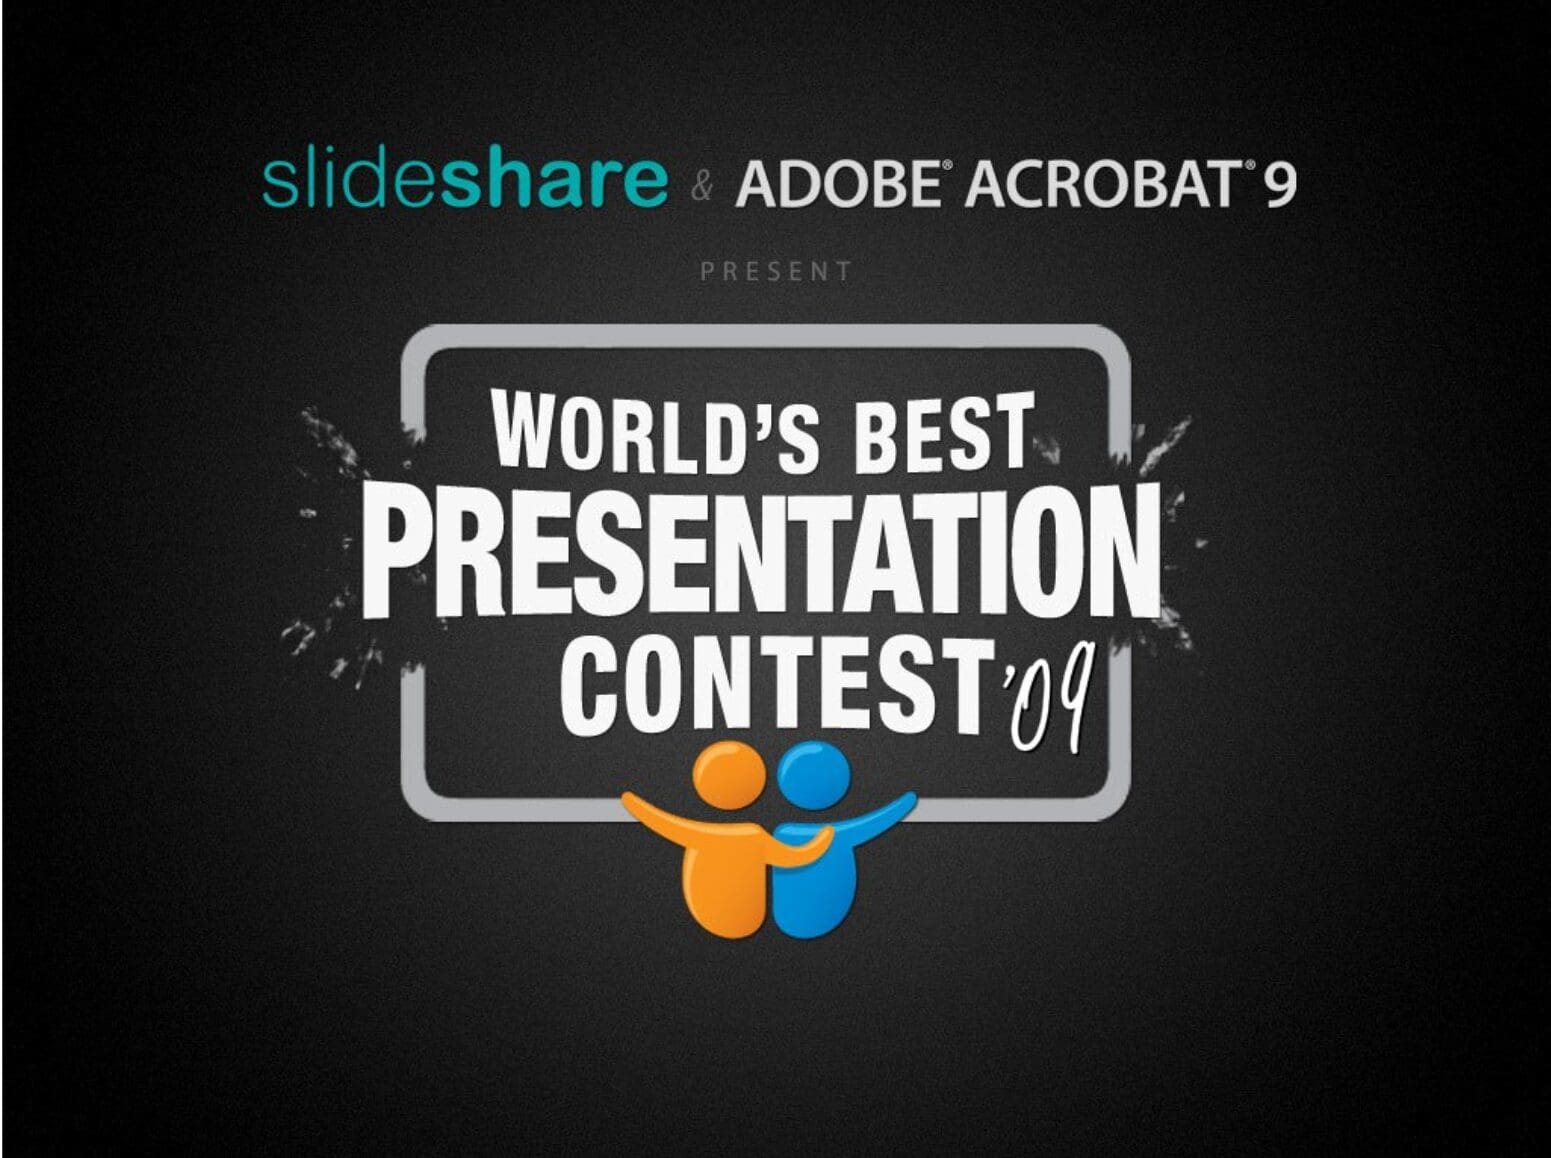 Slideshare hosts a presentation contest